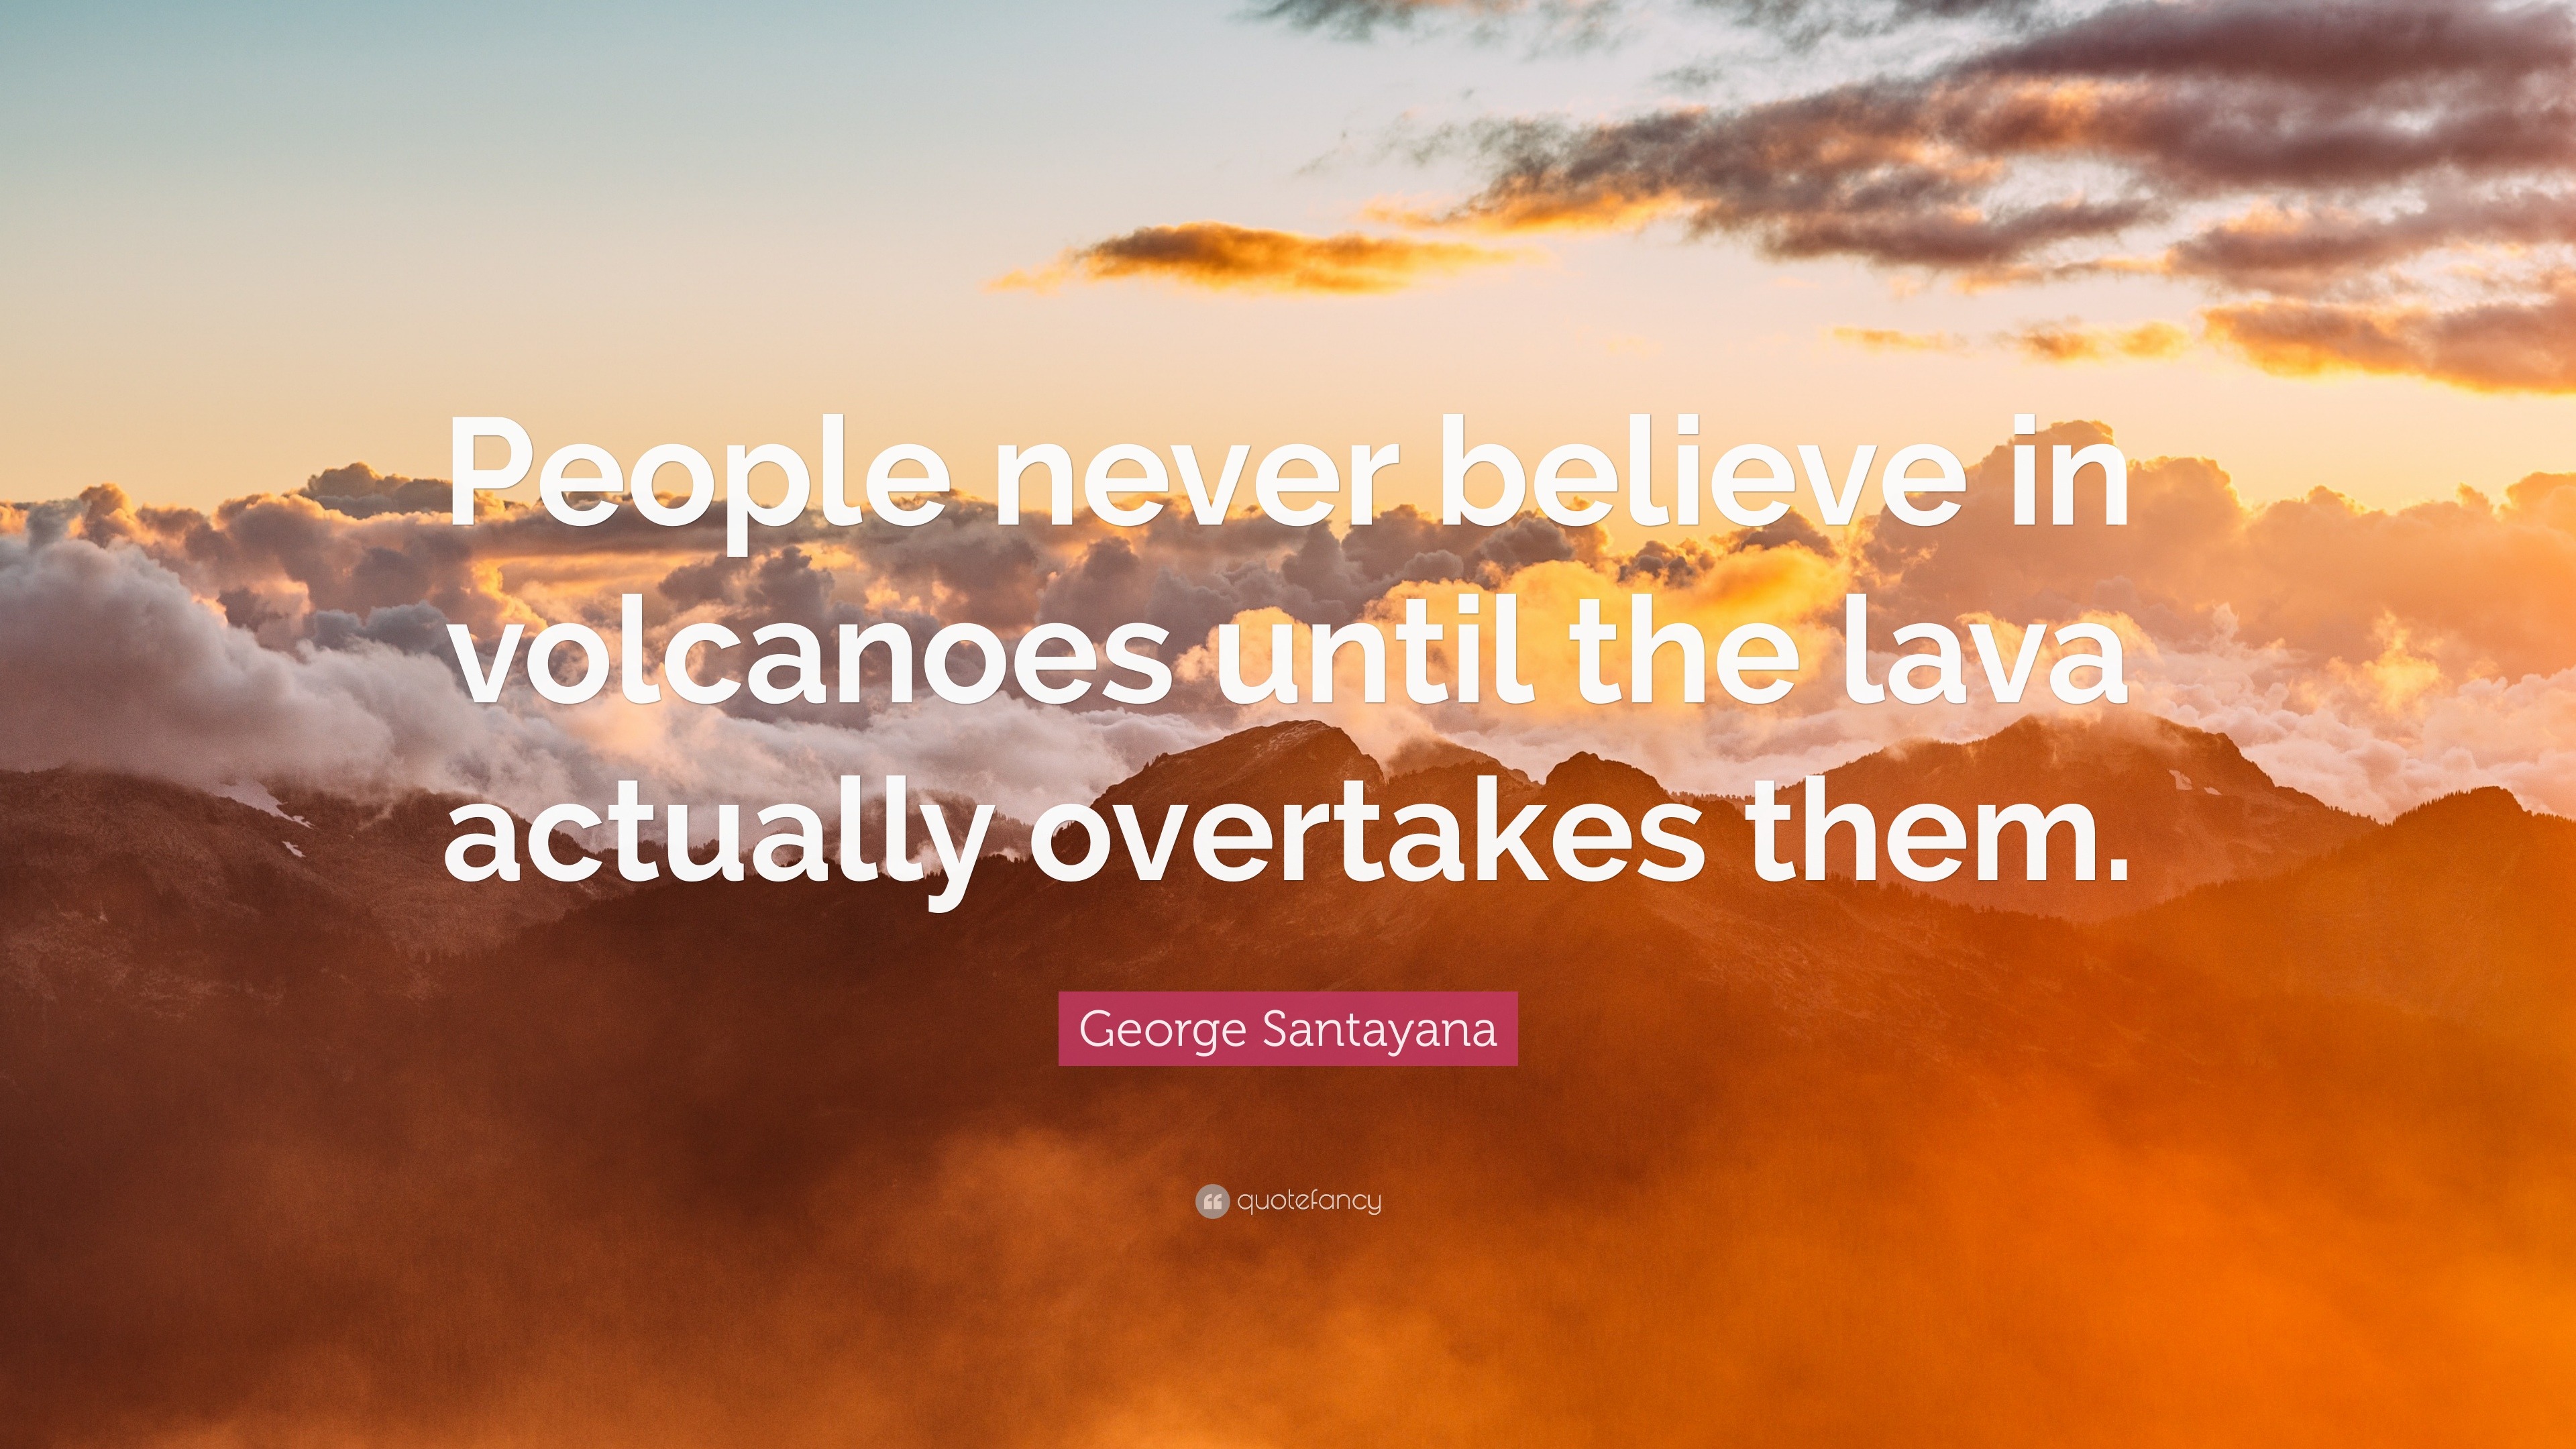 George Santayana Quote: “People never believe in volcanoes until the